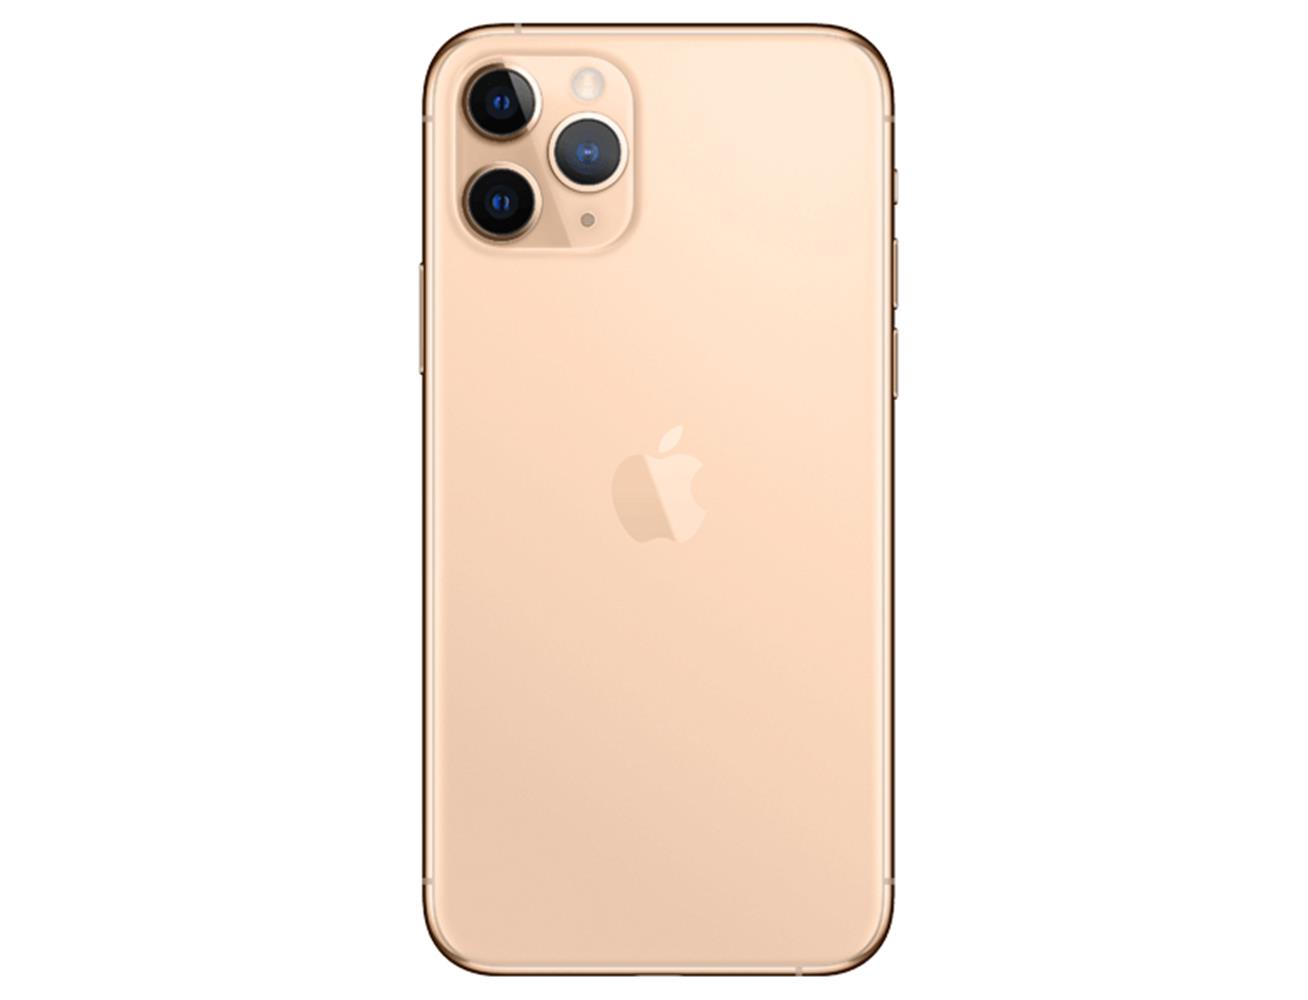 Apple iPhone 11 Pro Max Dual Sim (Hong Kong Version) 512GB - Gold